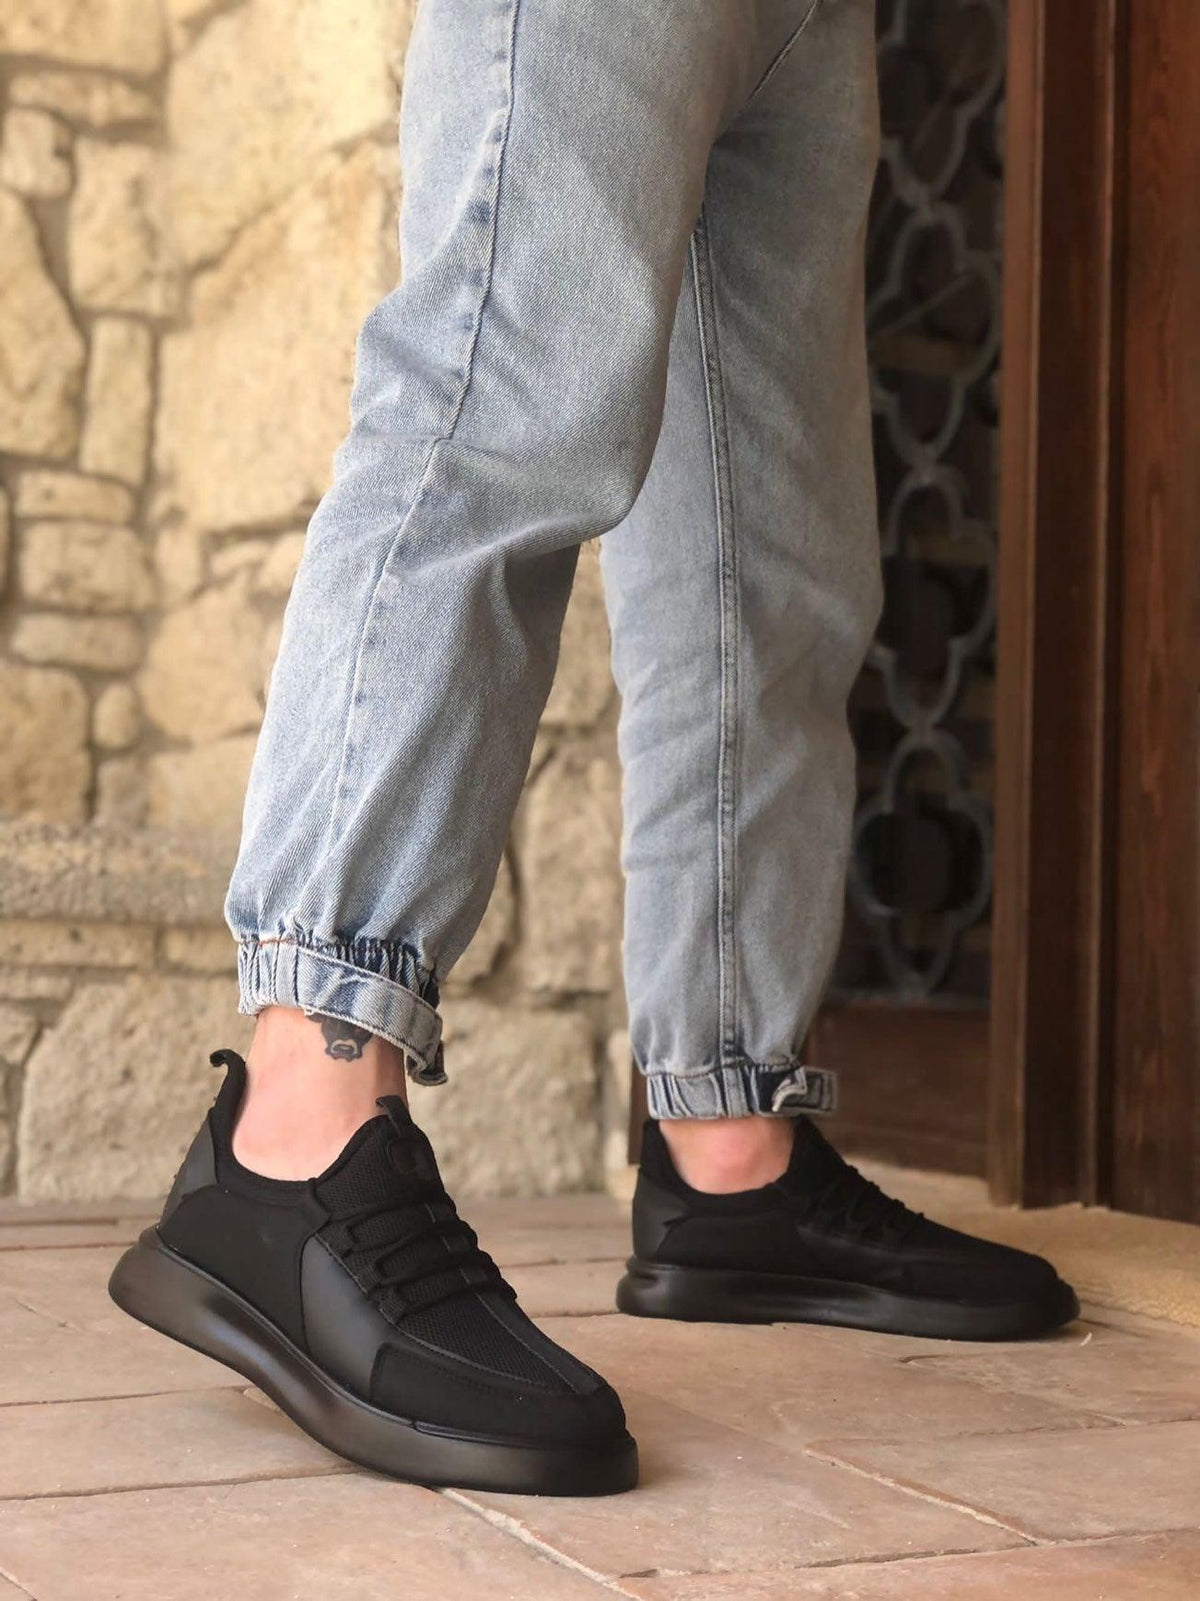 BA0204 Men's Black Black Sole Lace-Up High-Sole Style Sneakers - STREET MODE ™